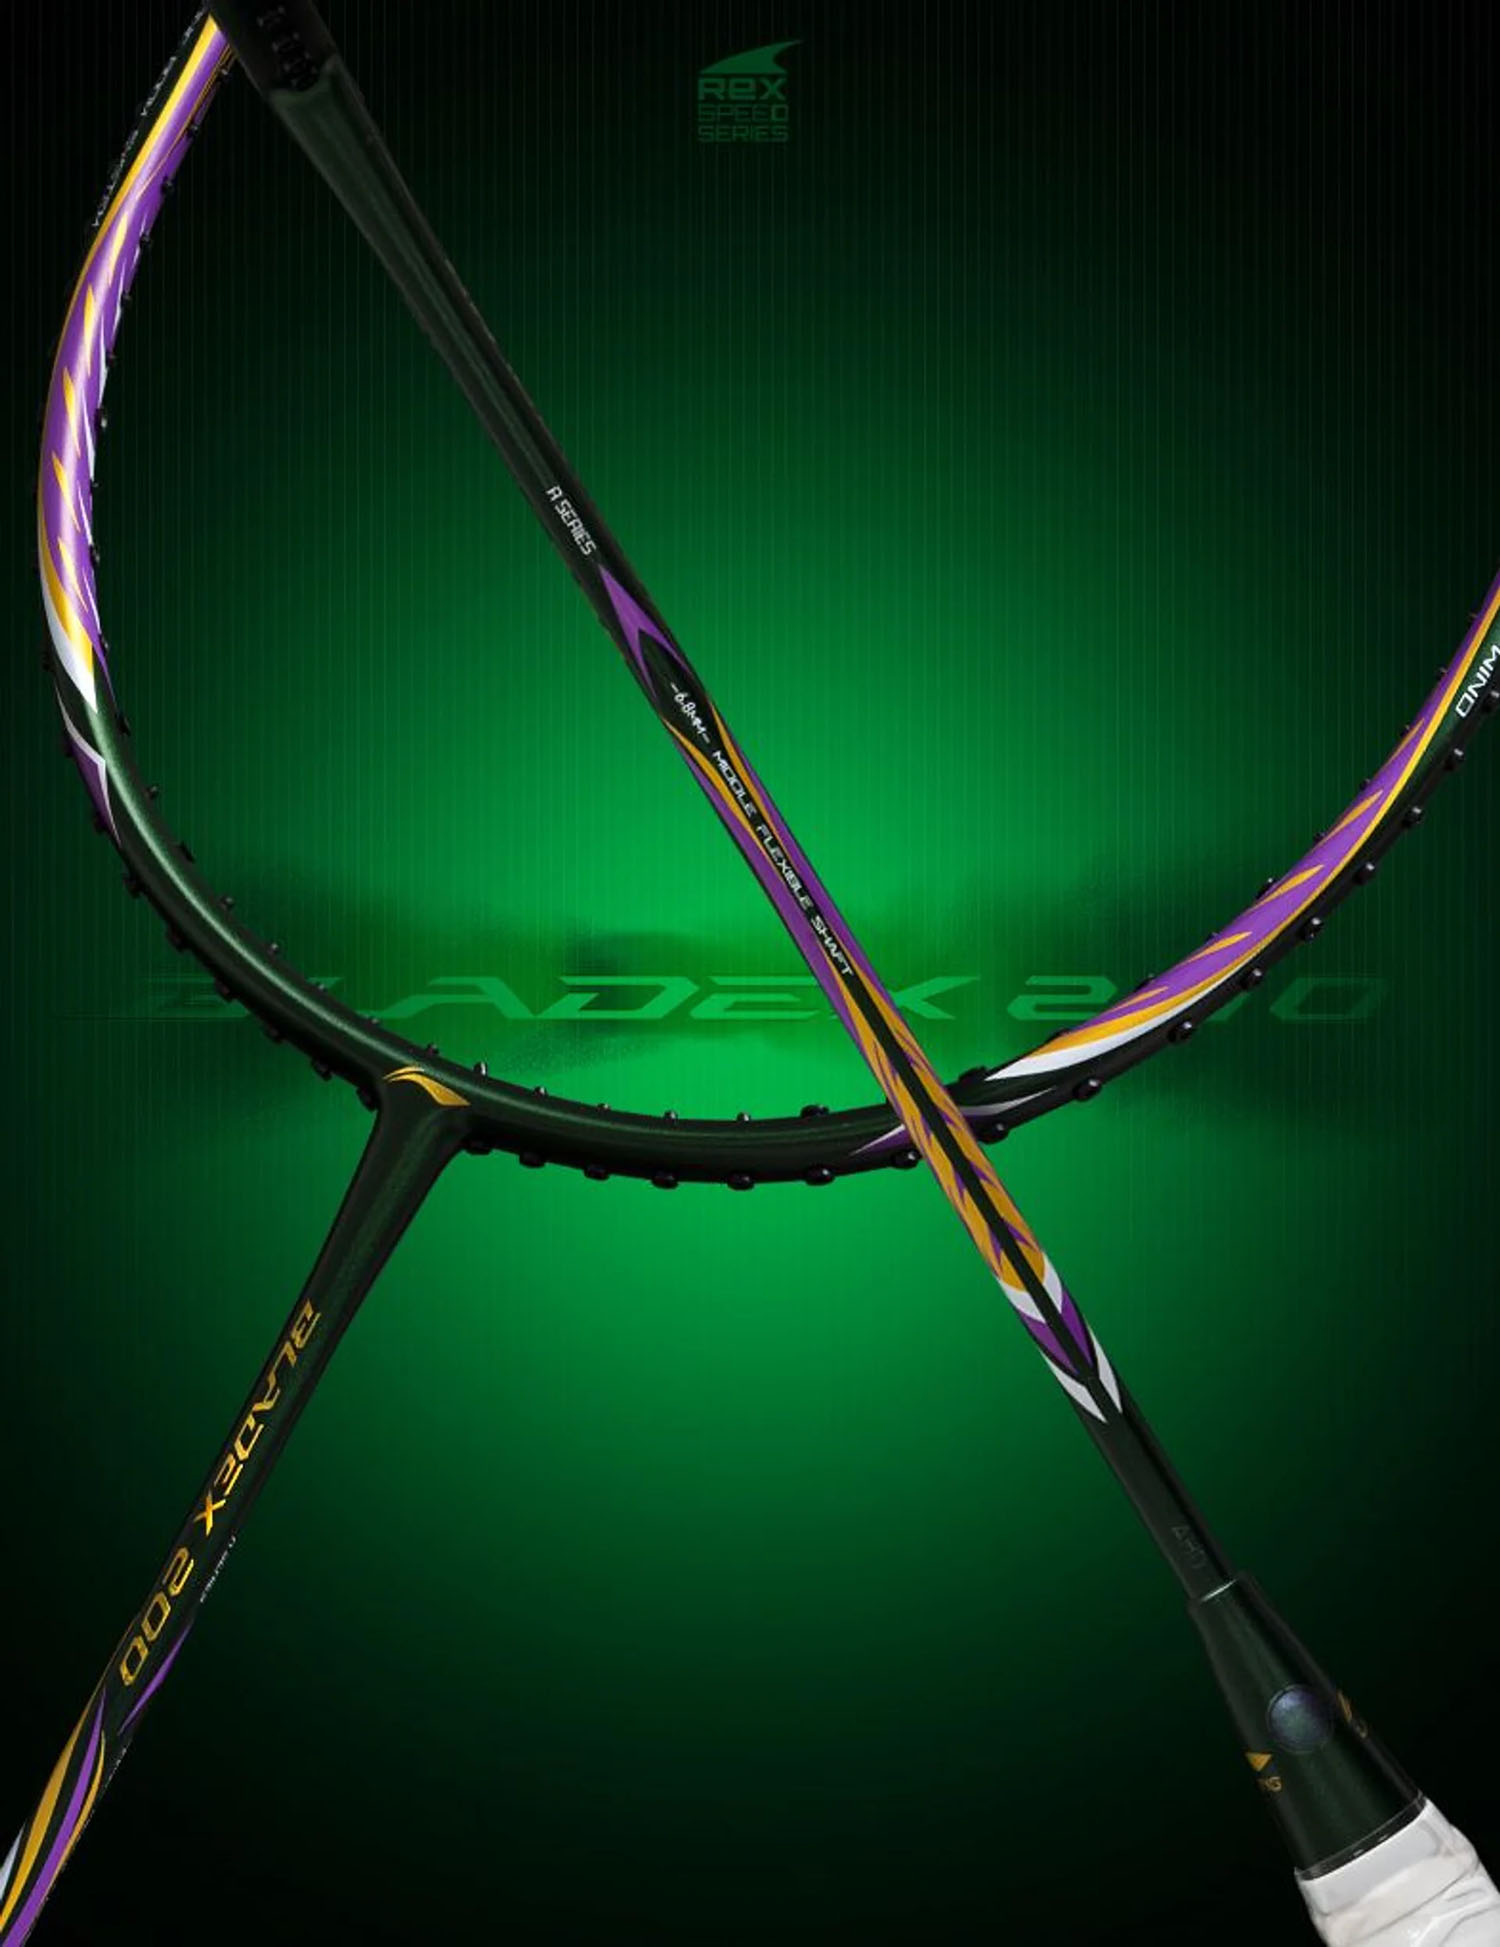 bladex racket